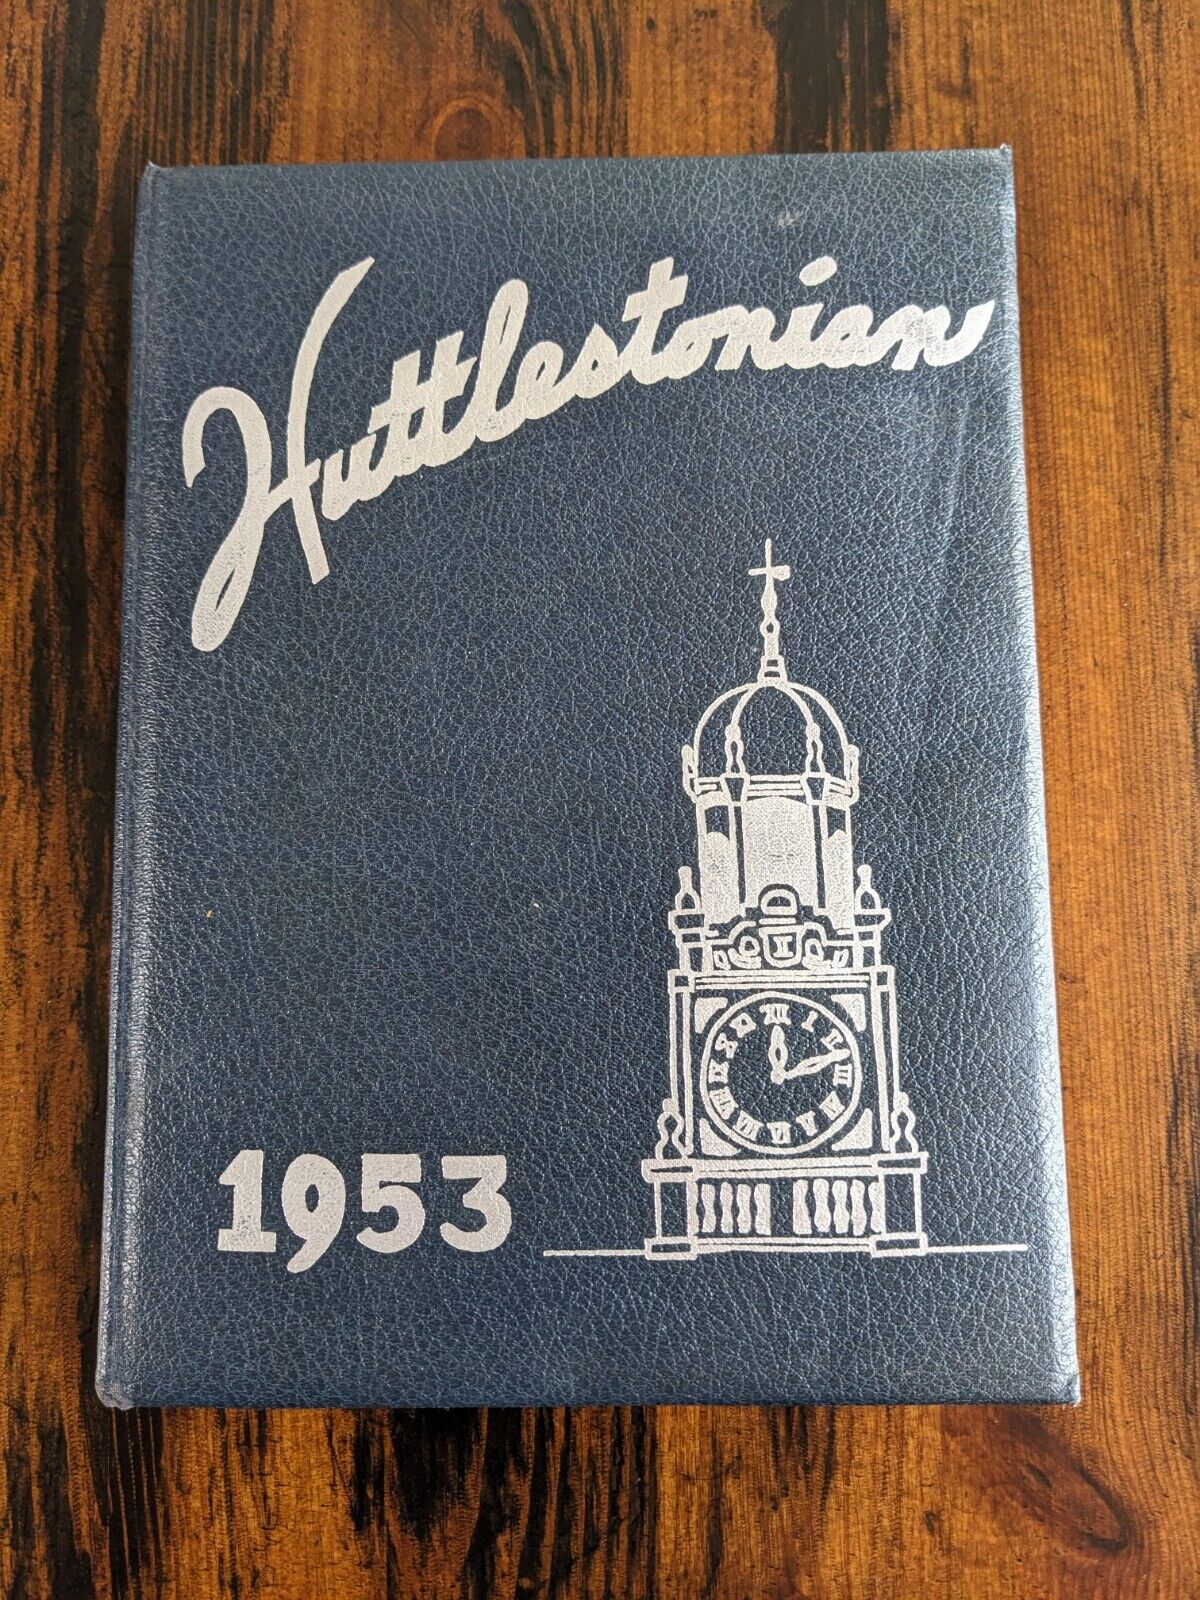 Vintage Yearbook: Fairhaven High School 1953 (Fairhaven, Massachusetts)